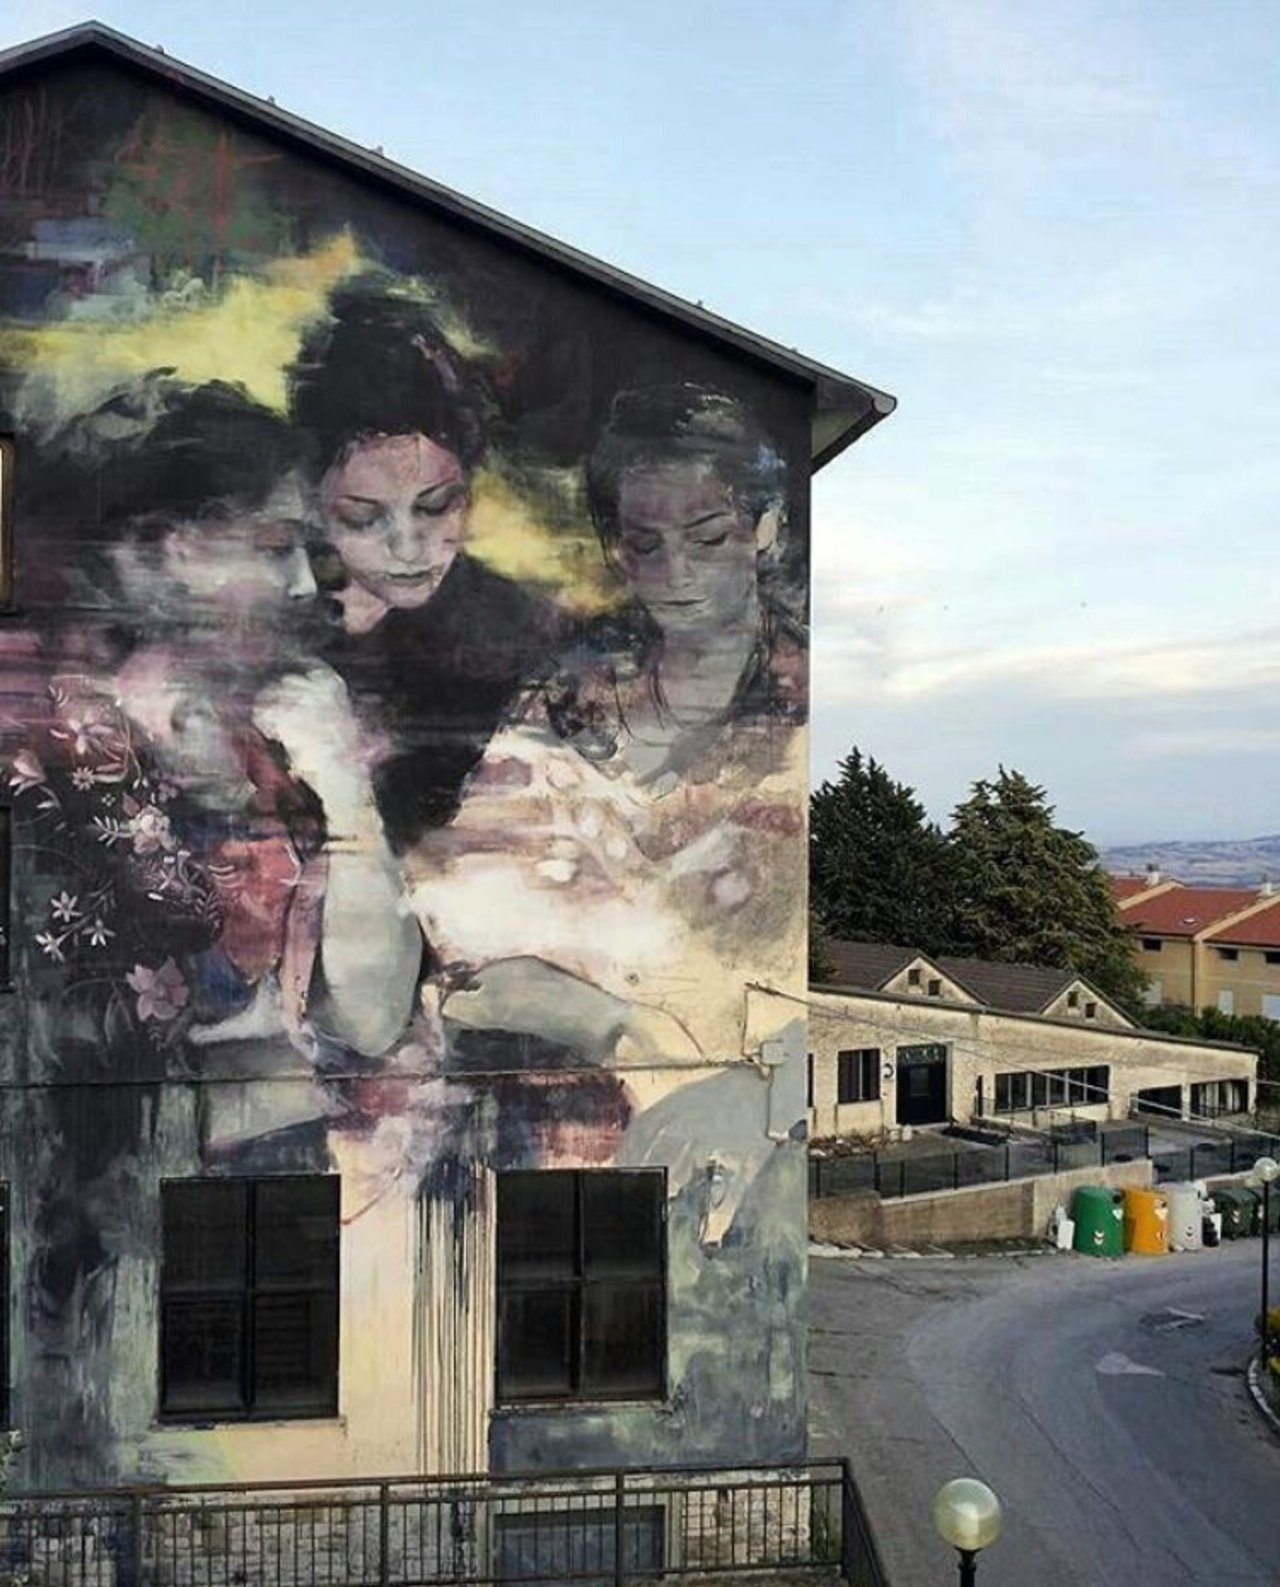 RT GoogleStreetArt: New Street Art by Bosoletti found in Italy #art #graffiti #mural #streetart https://t.co/8fLbwQymrC